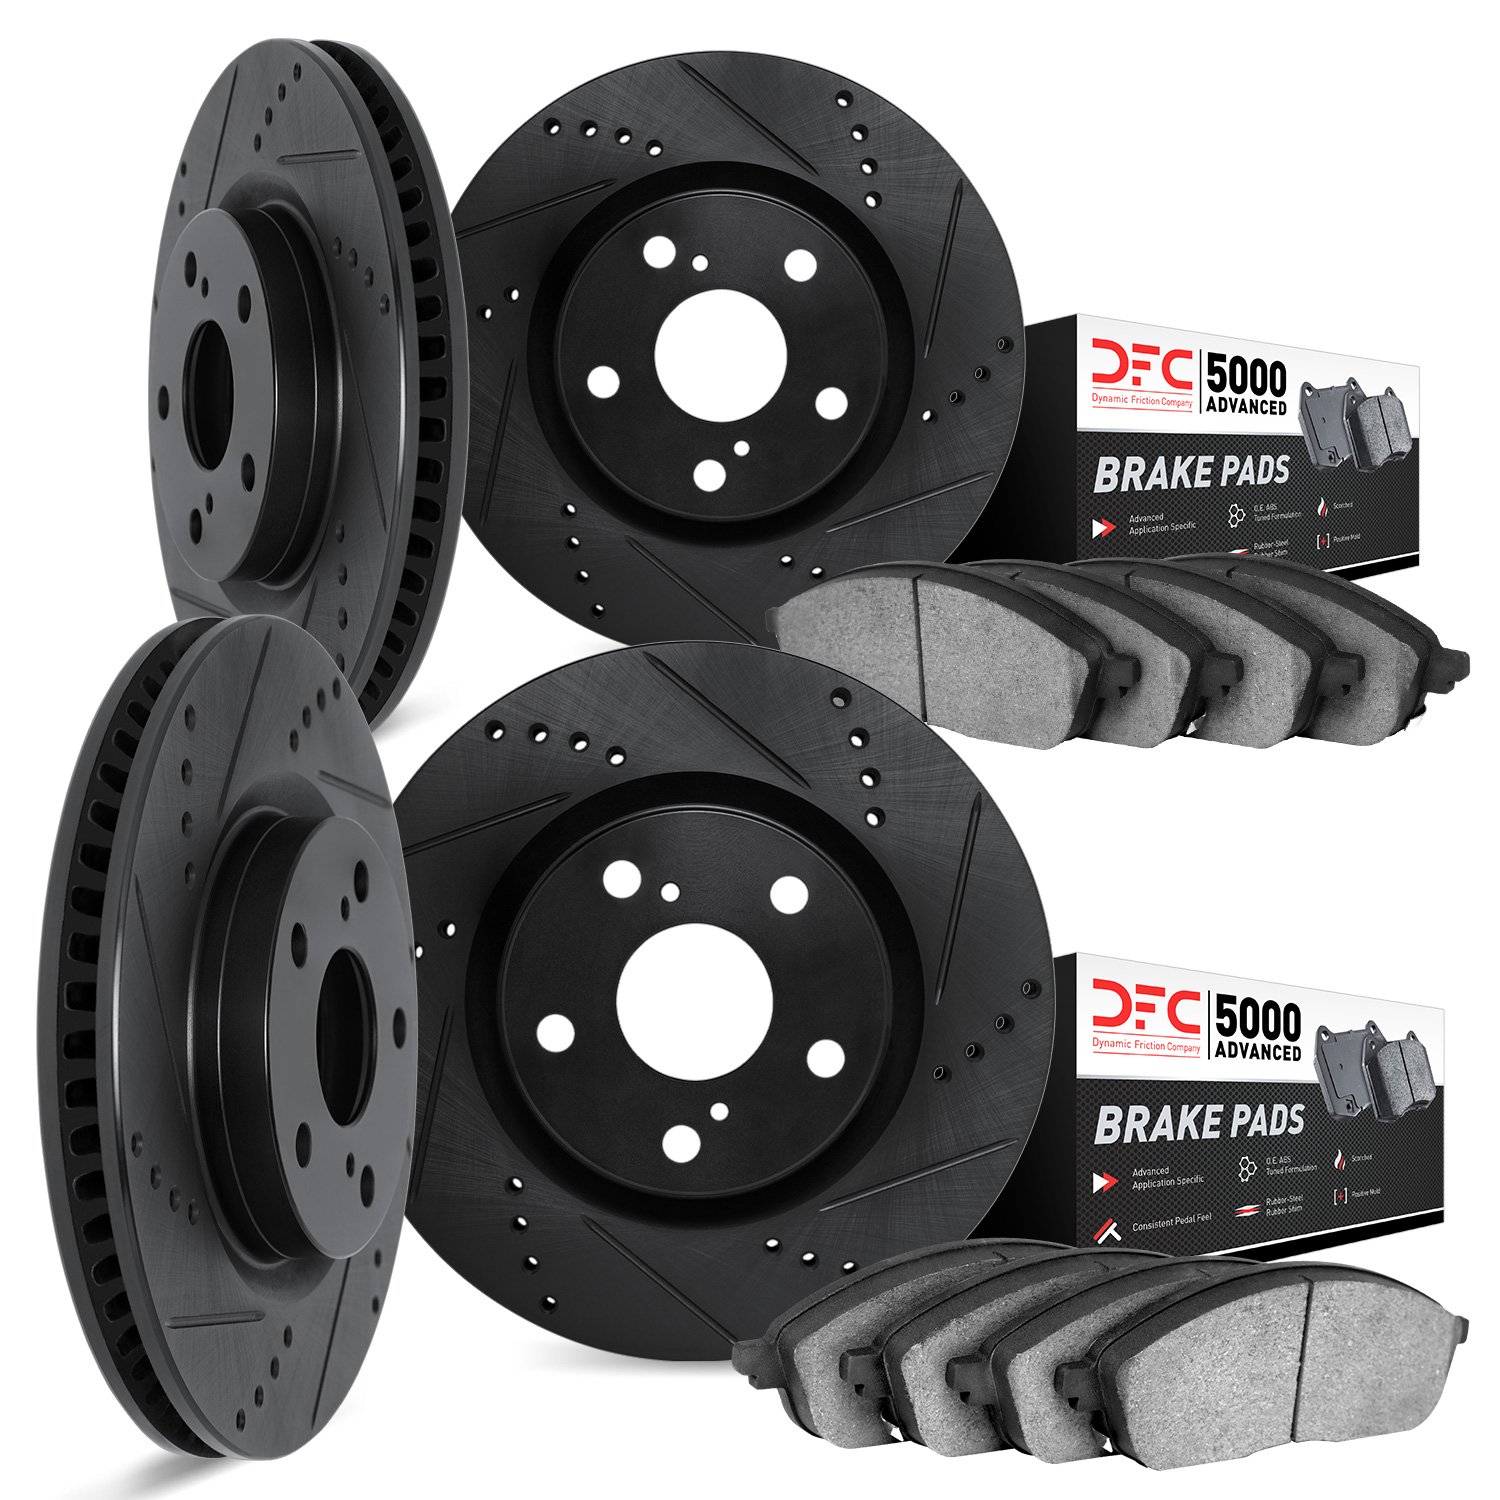 8504-80049 Drilled/Slotted Brake Rotors w/5000 Advanced Brake Pads Kit [Black], 2007-2015 Ford/Lincoln/Mercury/Mazda, Position: